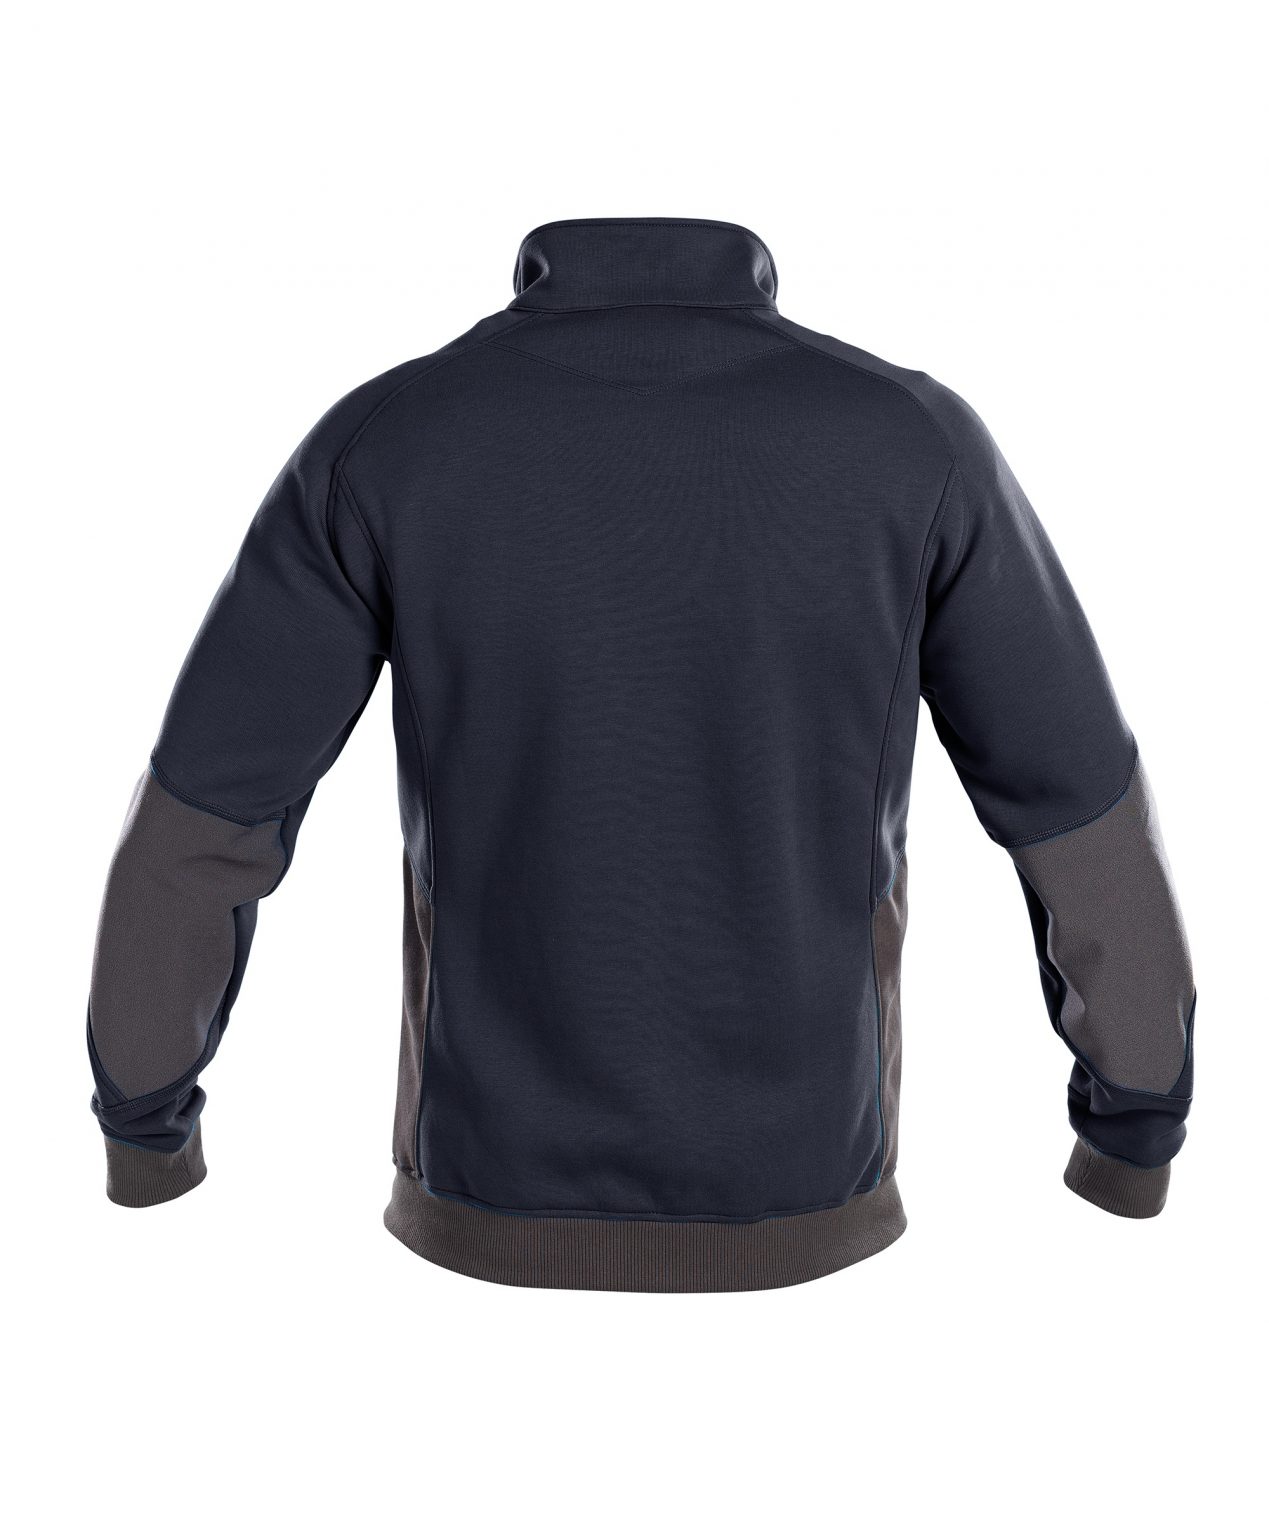 velox sweatshirt midnight blue anthracite grey back